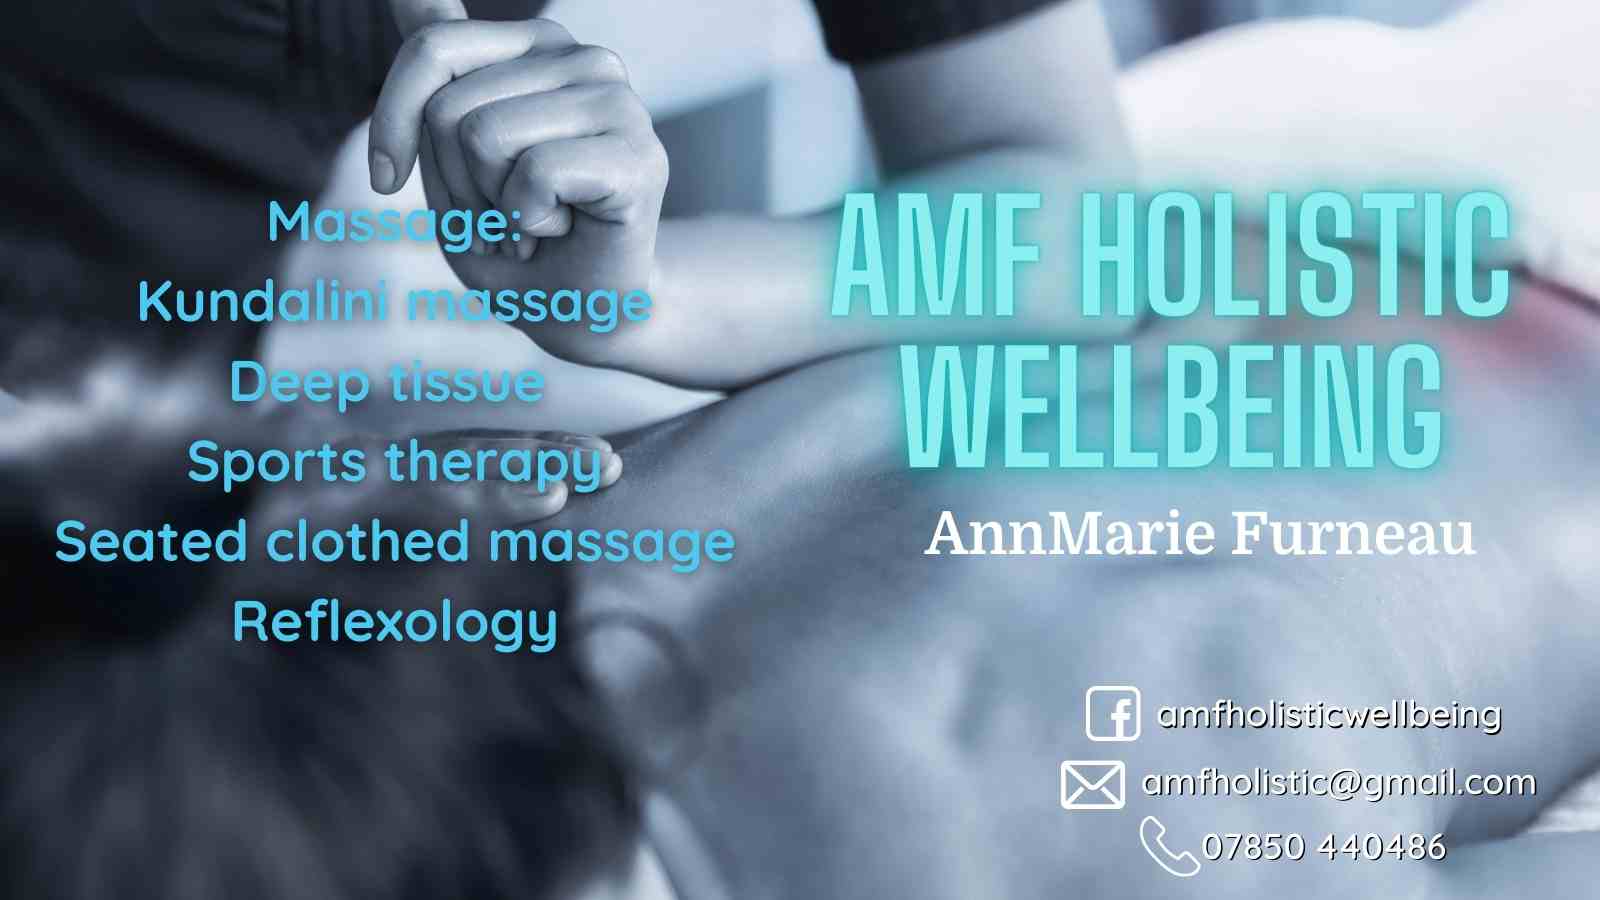 AMF Holistic Wellbeing